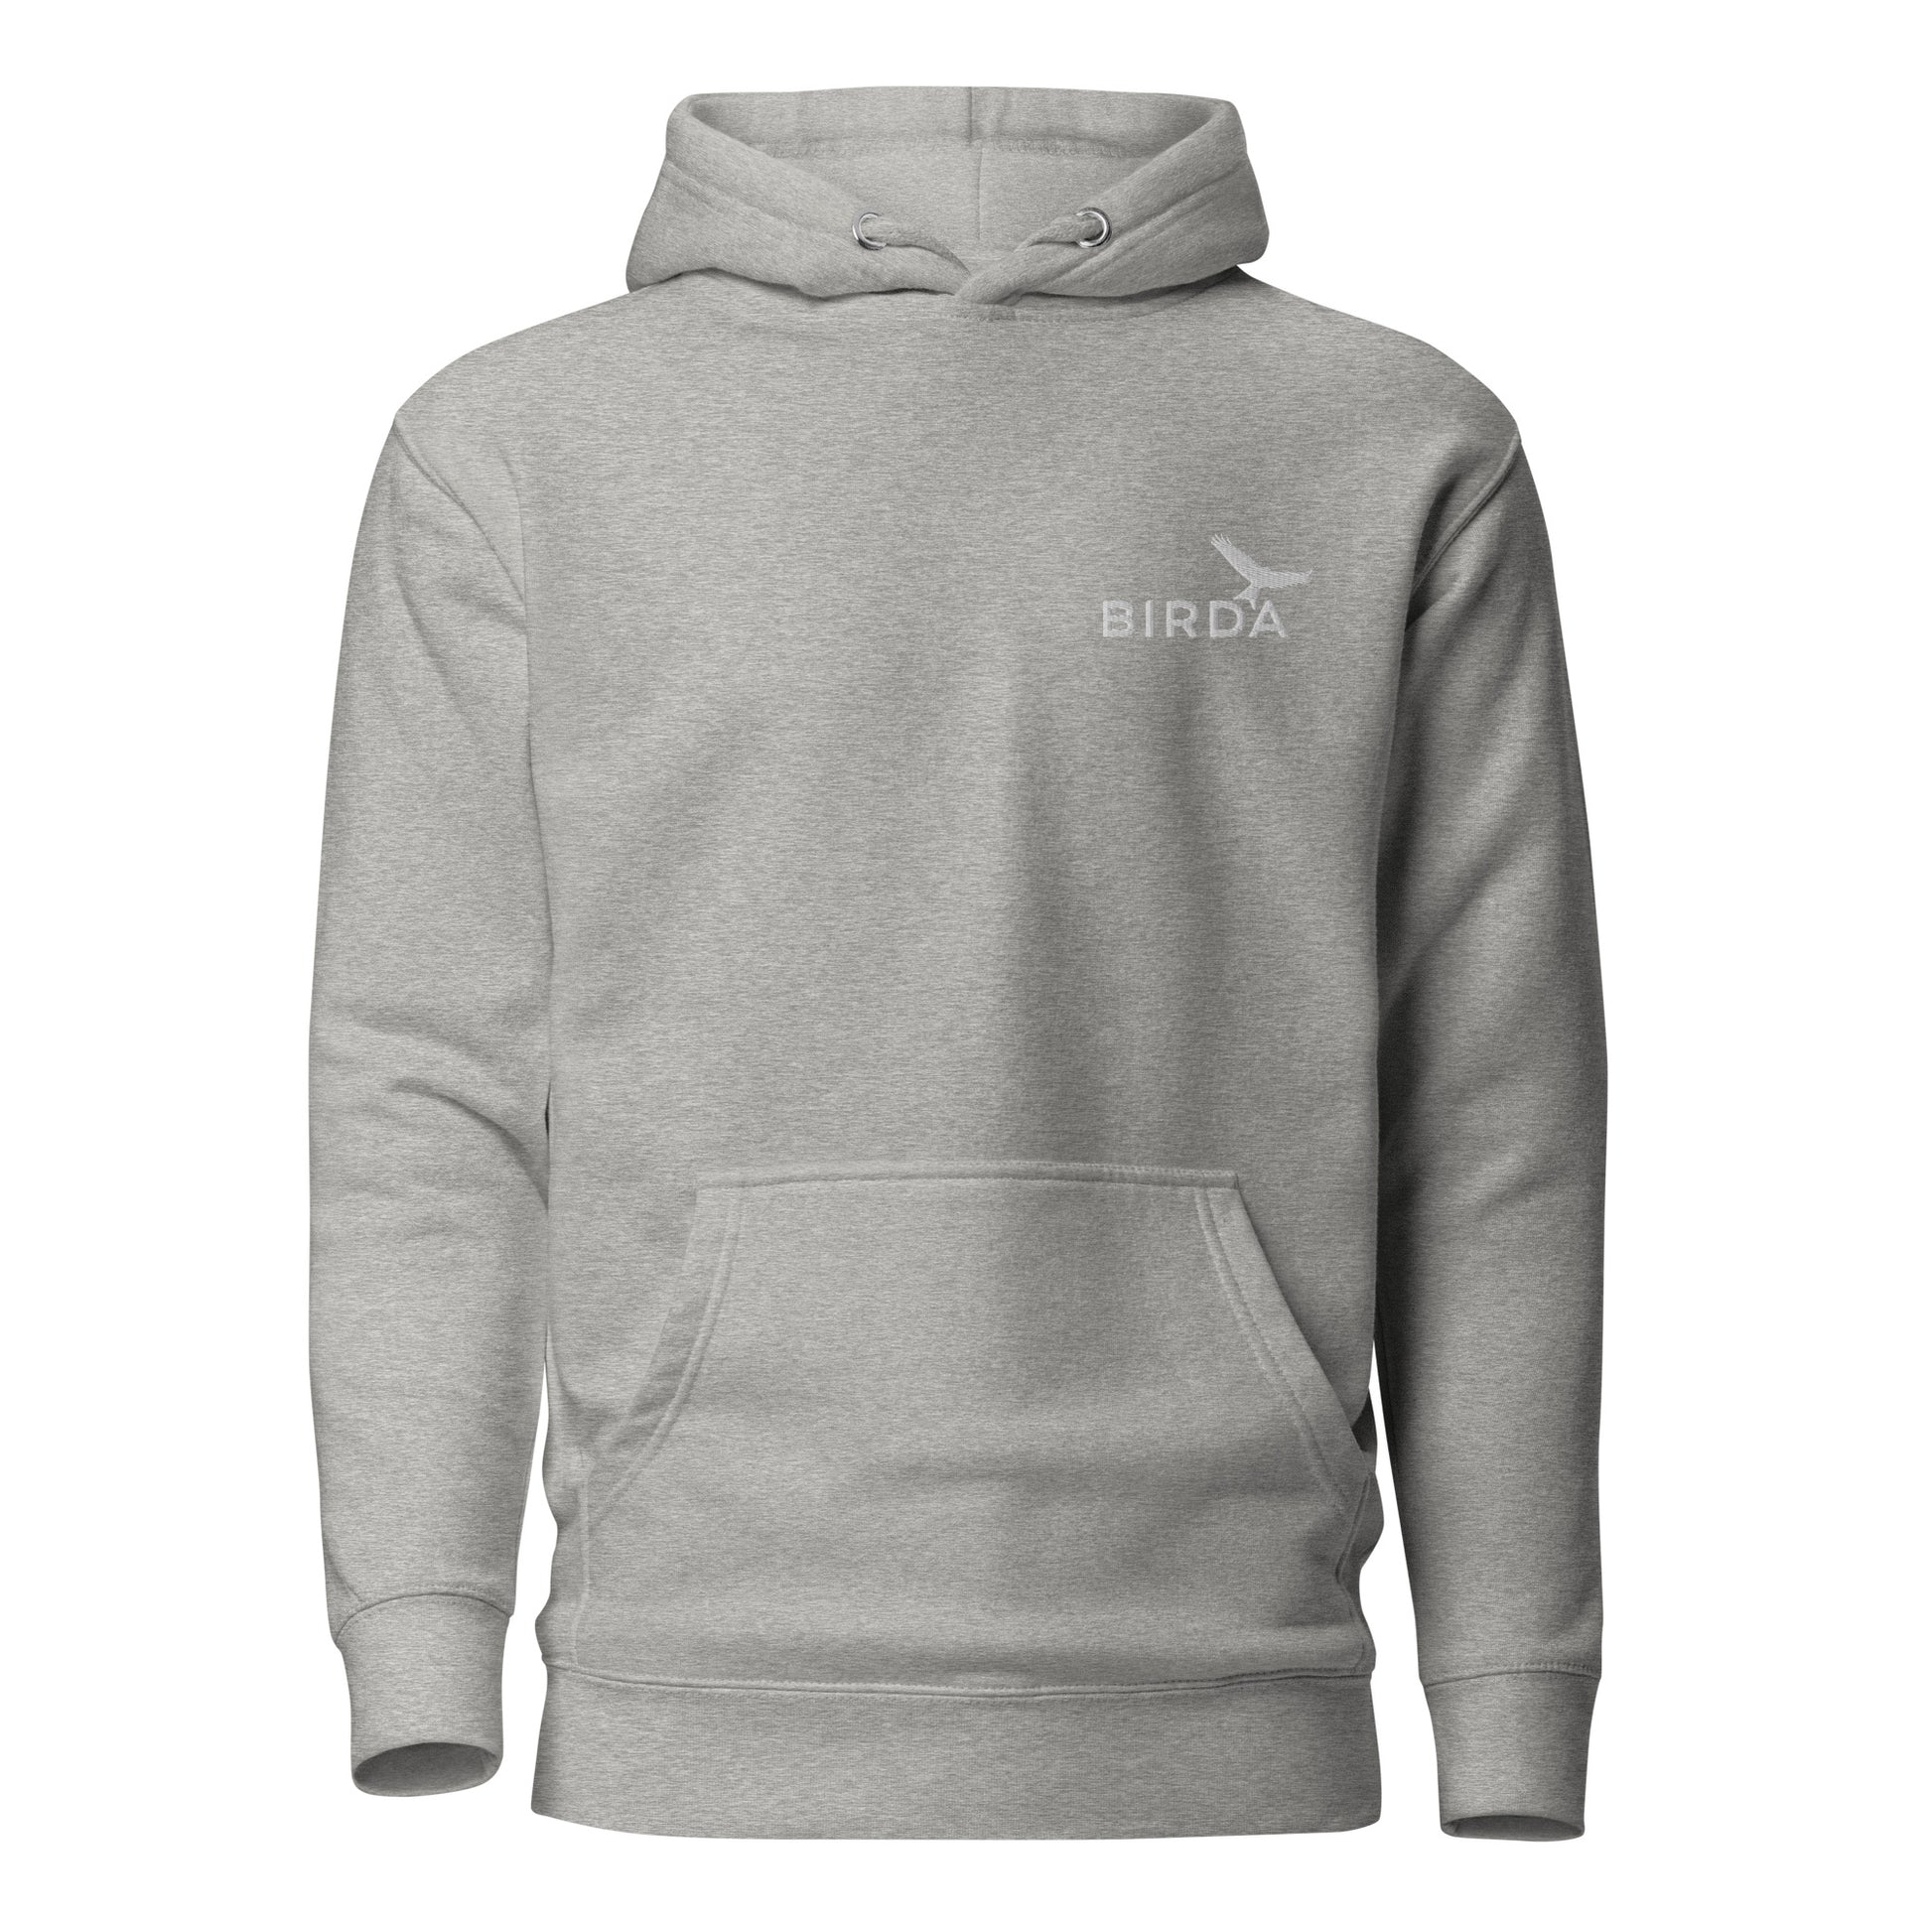 Birda bird premium hoodie - grey